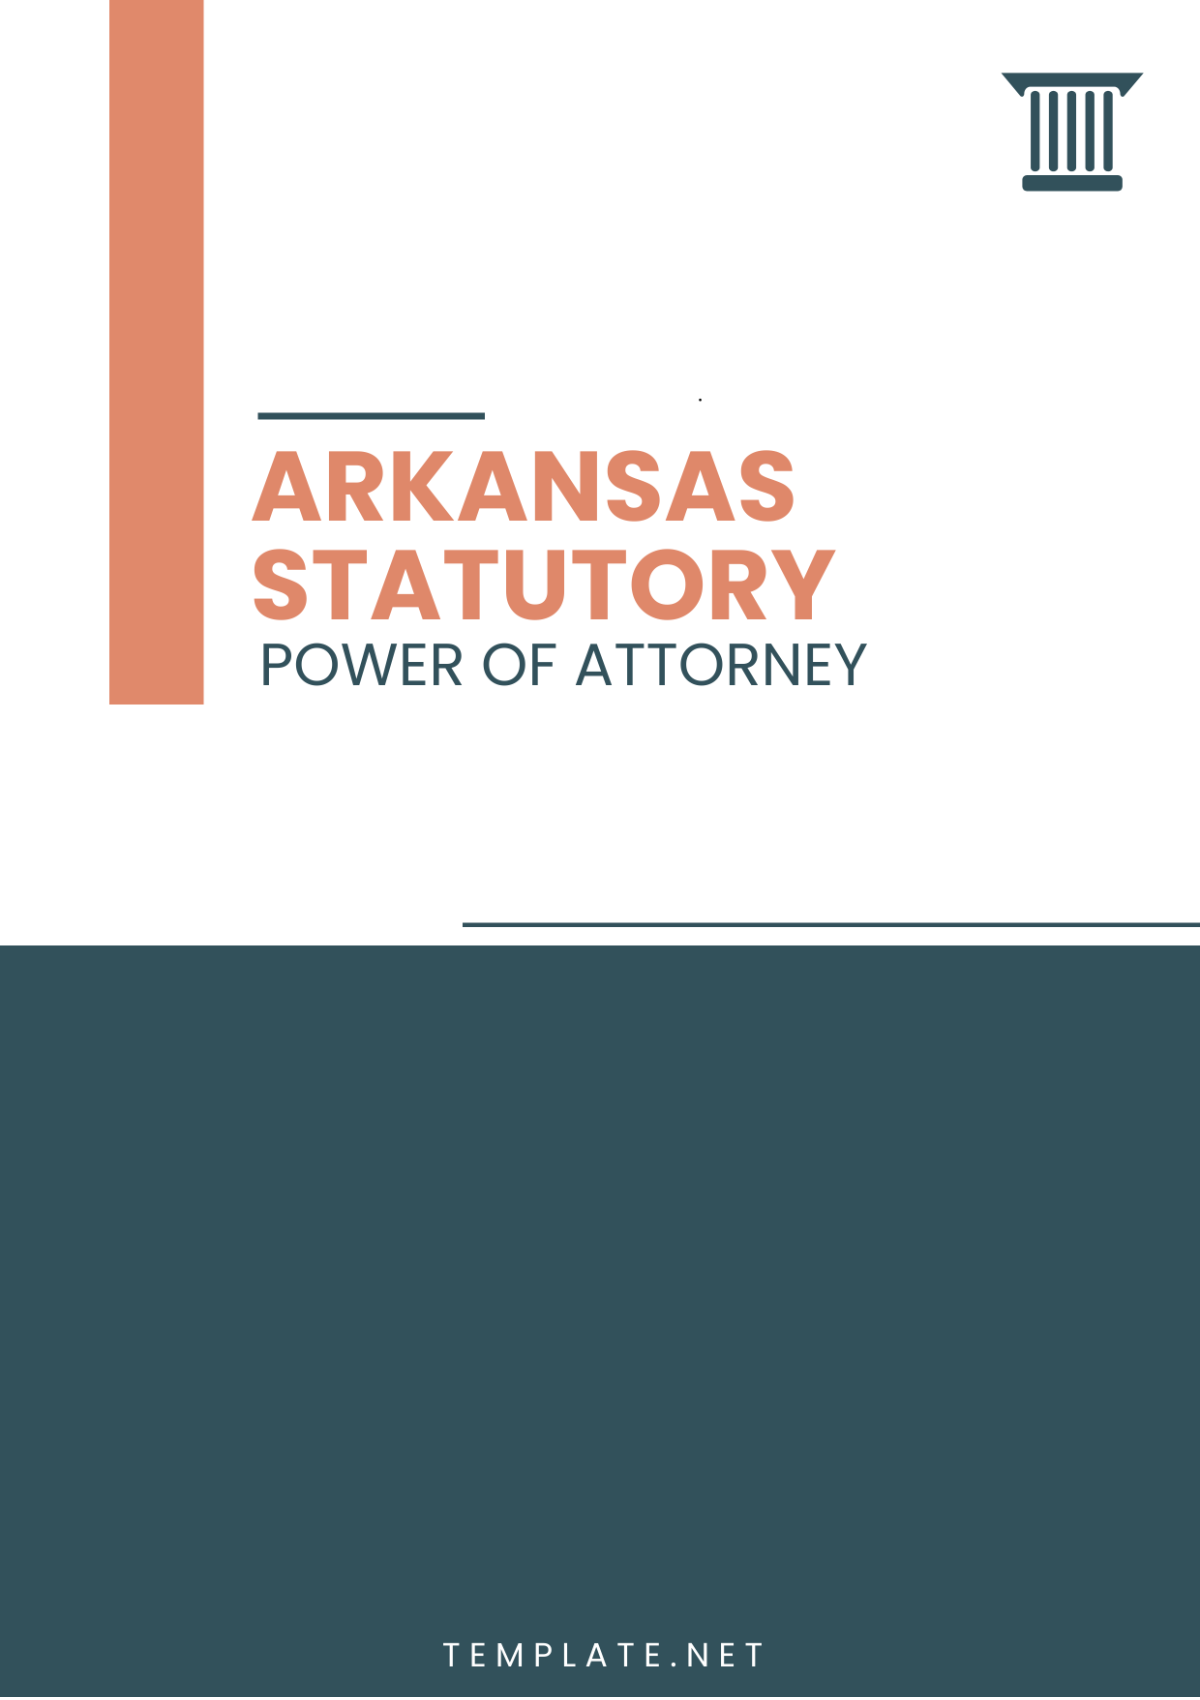 Arkansas Statutory Power of Attorney Template